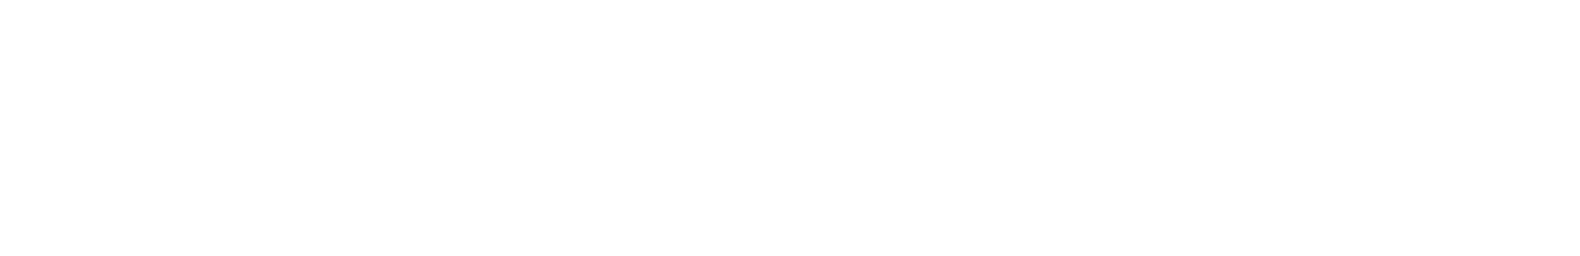 Oakley Capital Investments logo large for dark backgrounds (transparent PNG)